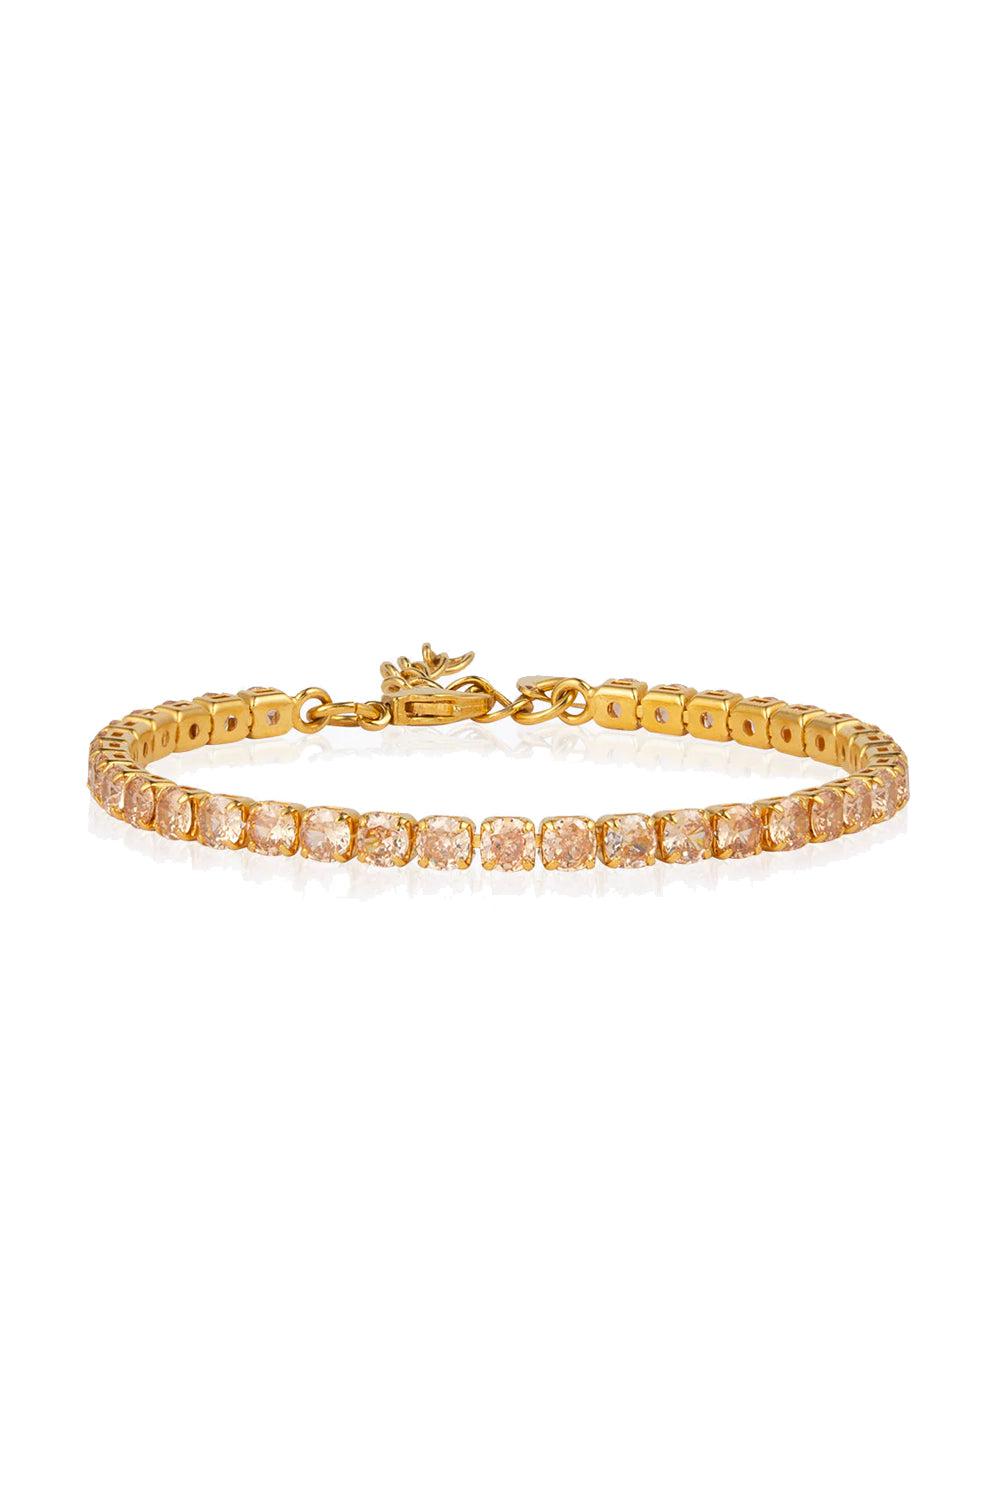 Zara Bracelet Gold Golden Shadow